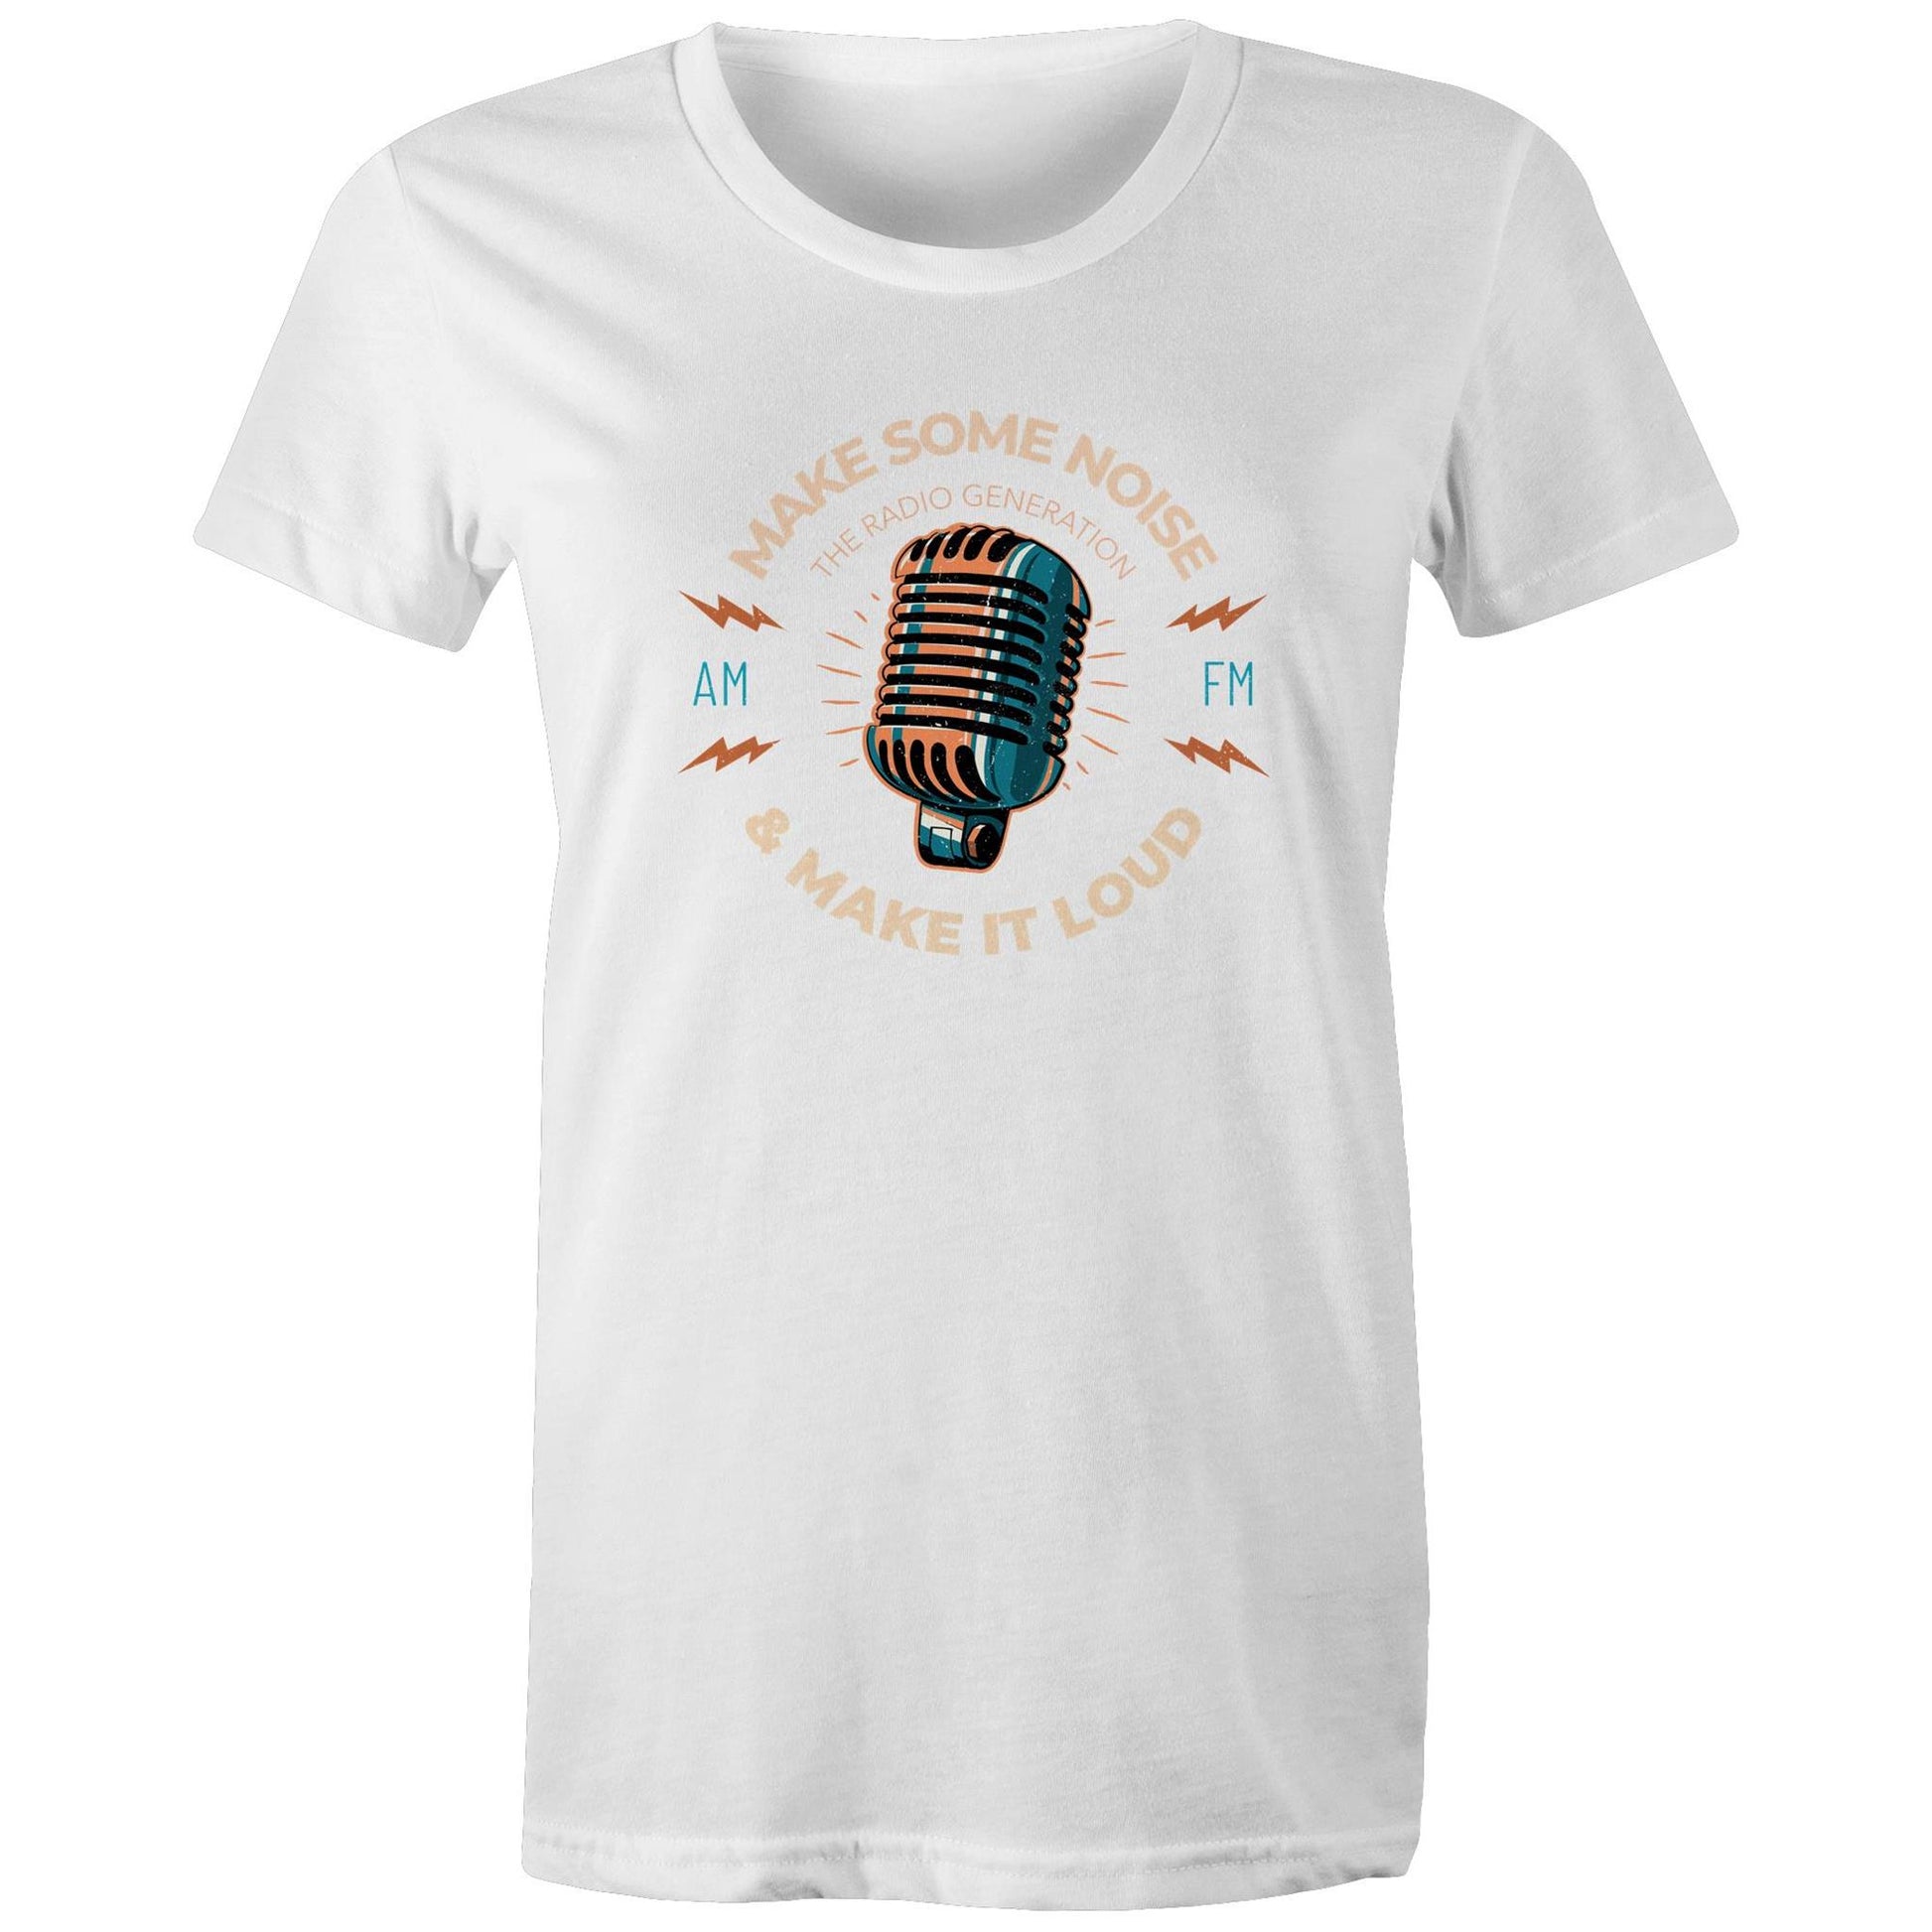 Make Some Noise And Make It Loud - Womens T-shirt White Womens T-shirt Music